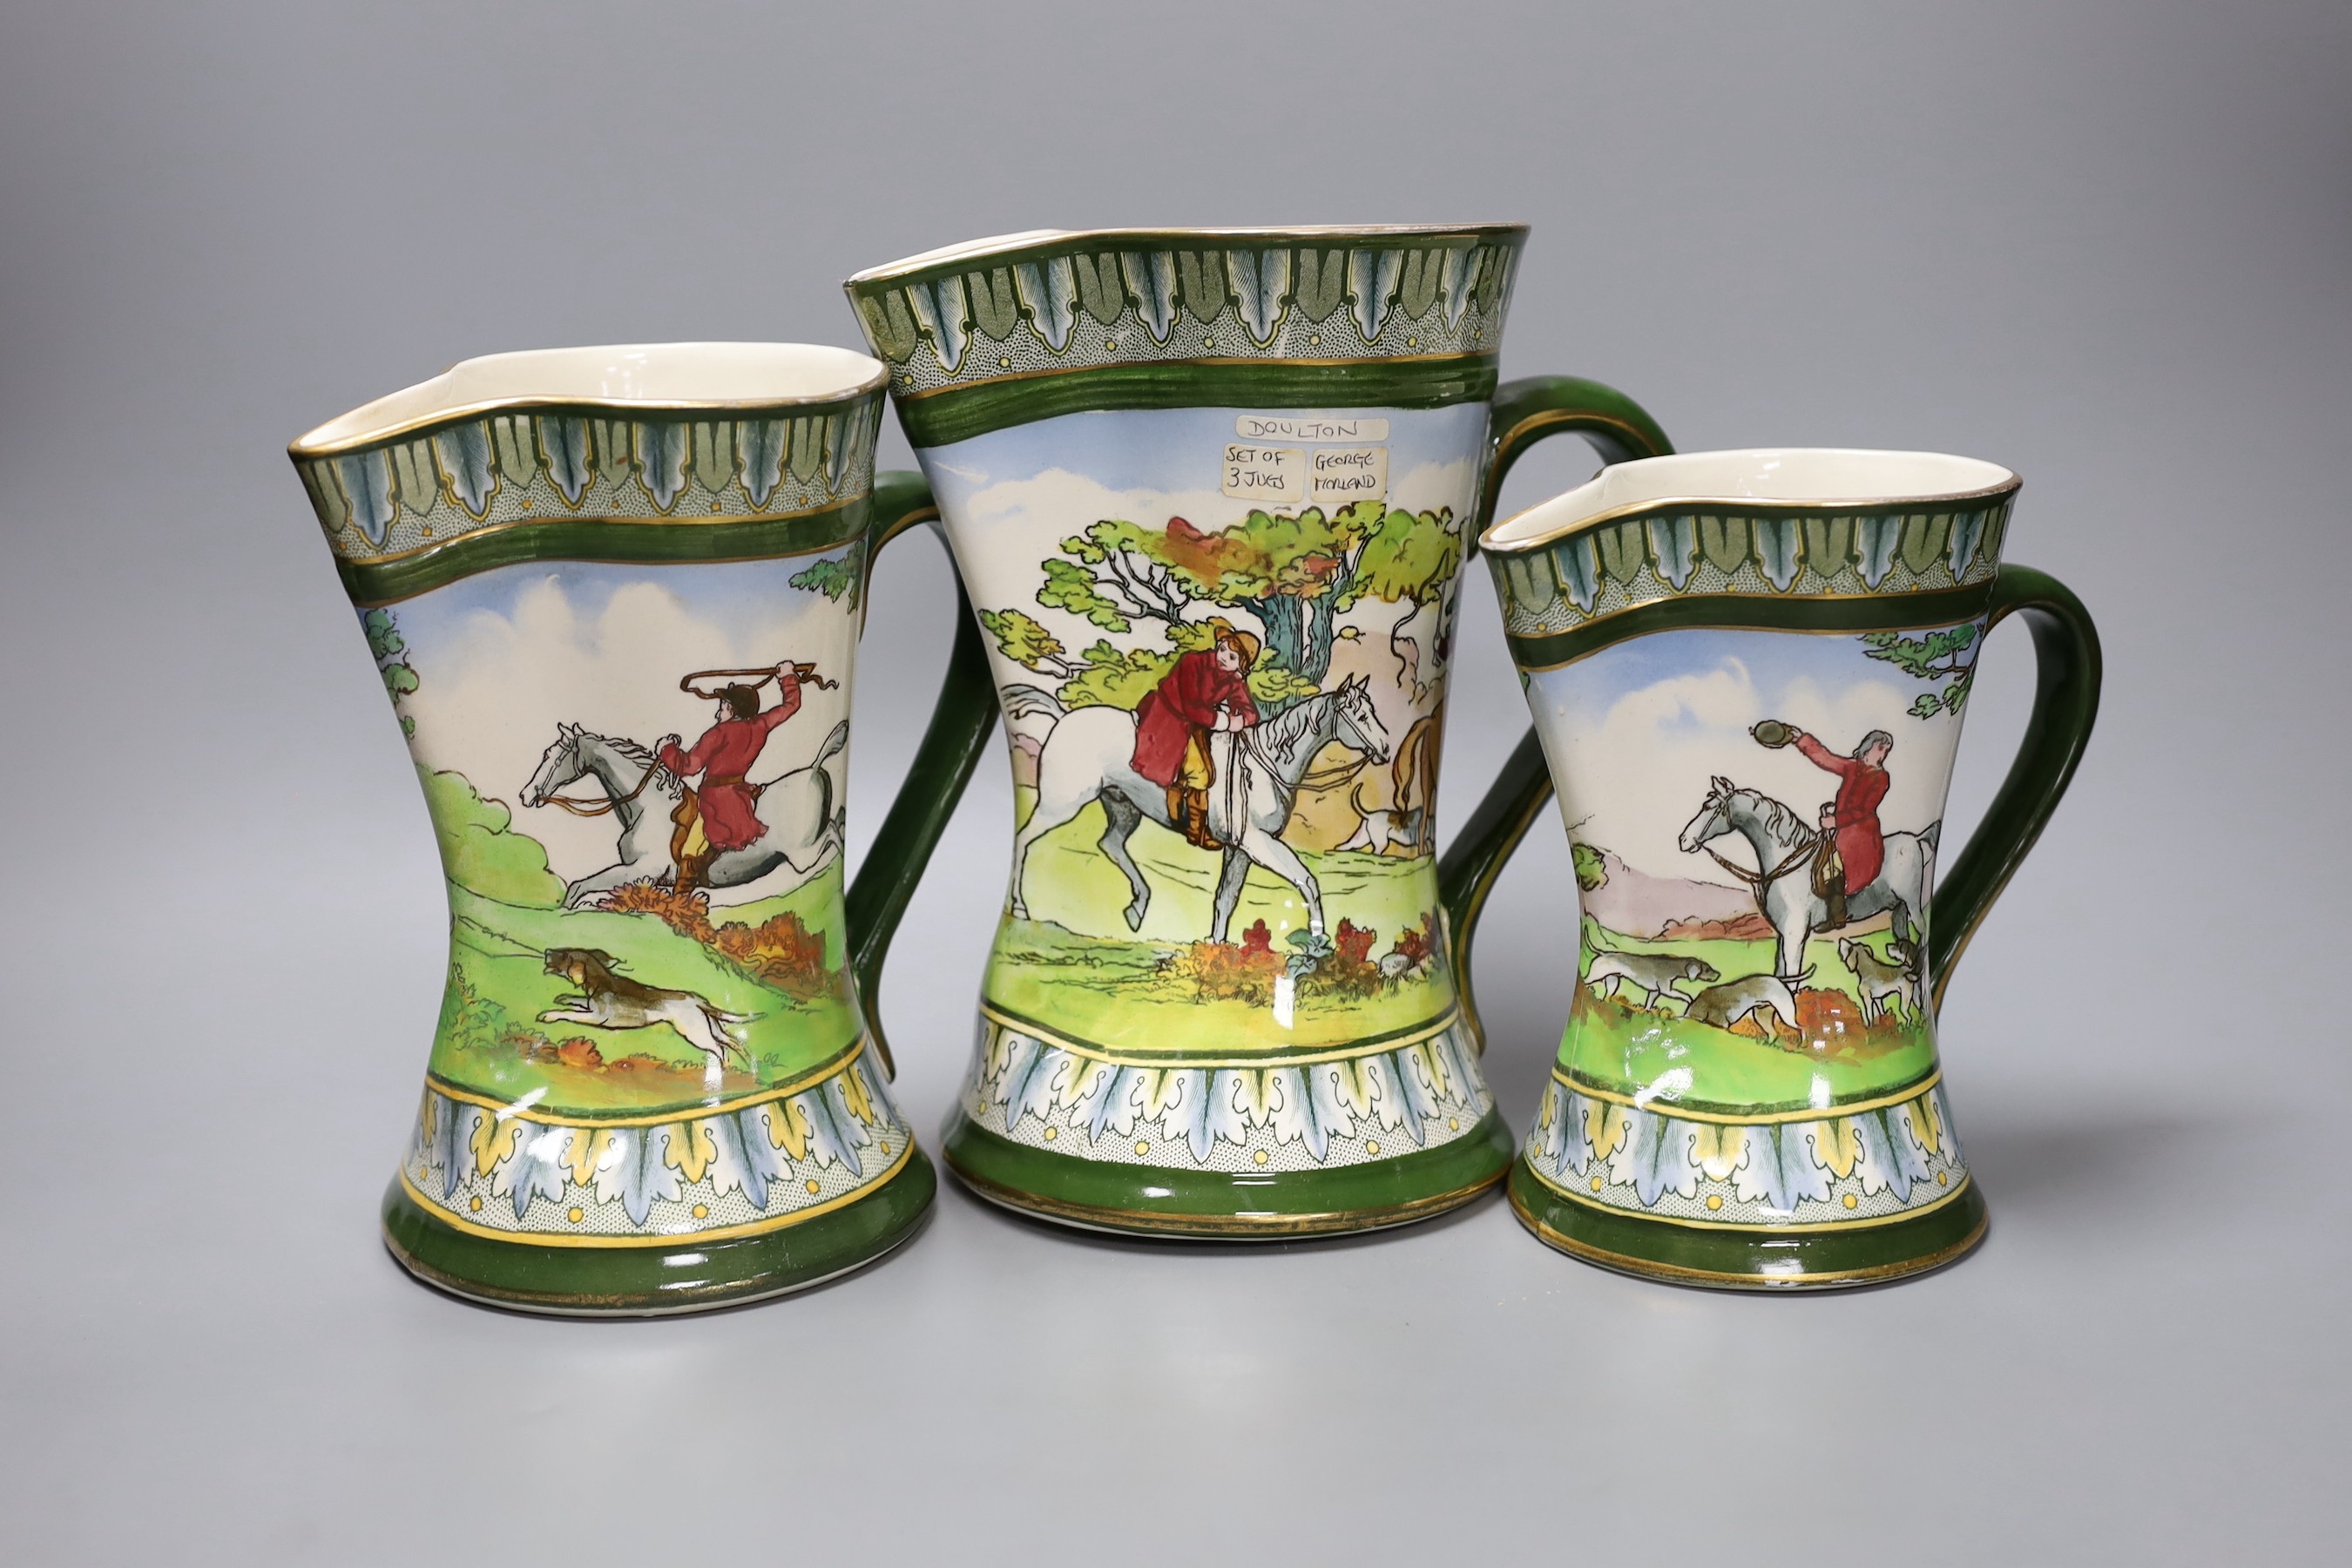 A graduated set of three Royal Doulton hunting jugs, 22cm